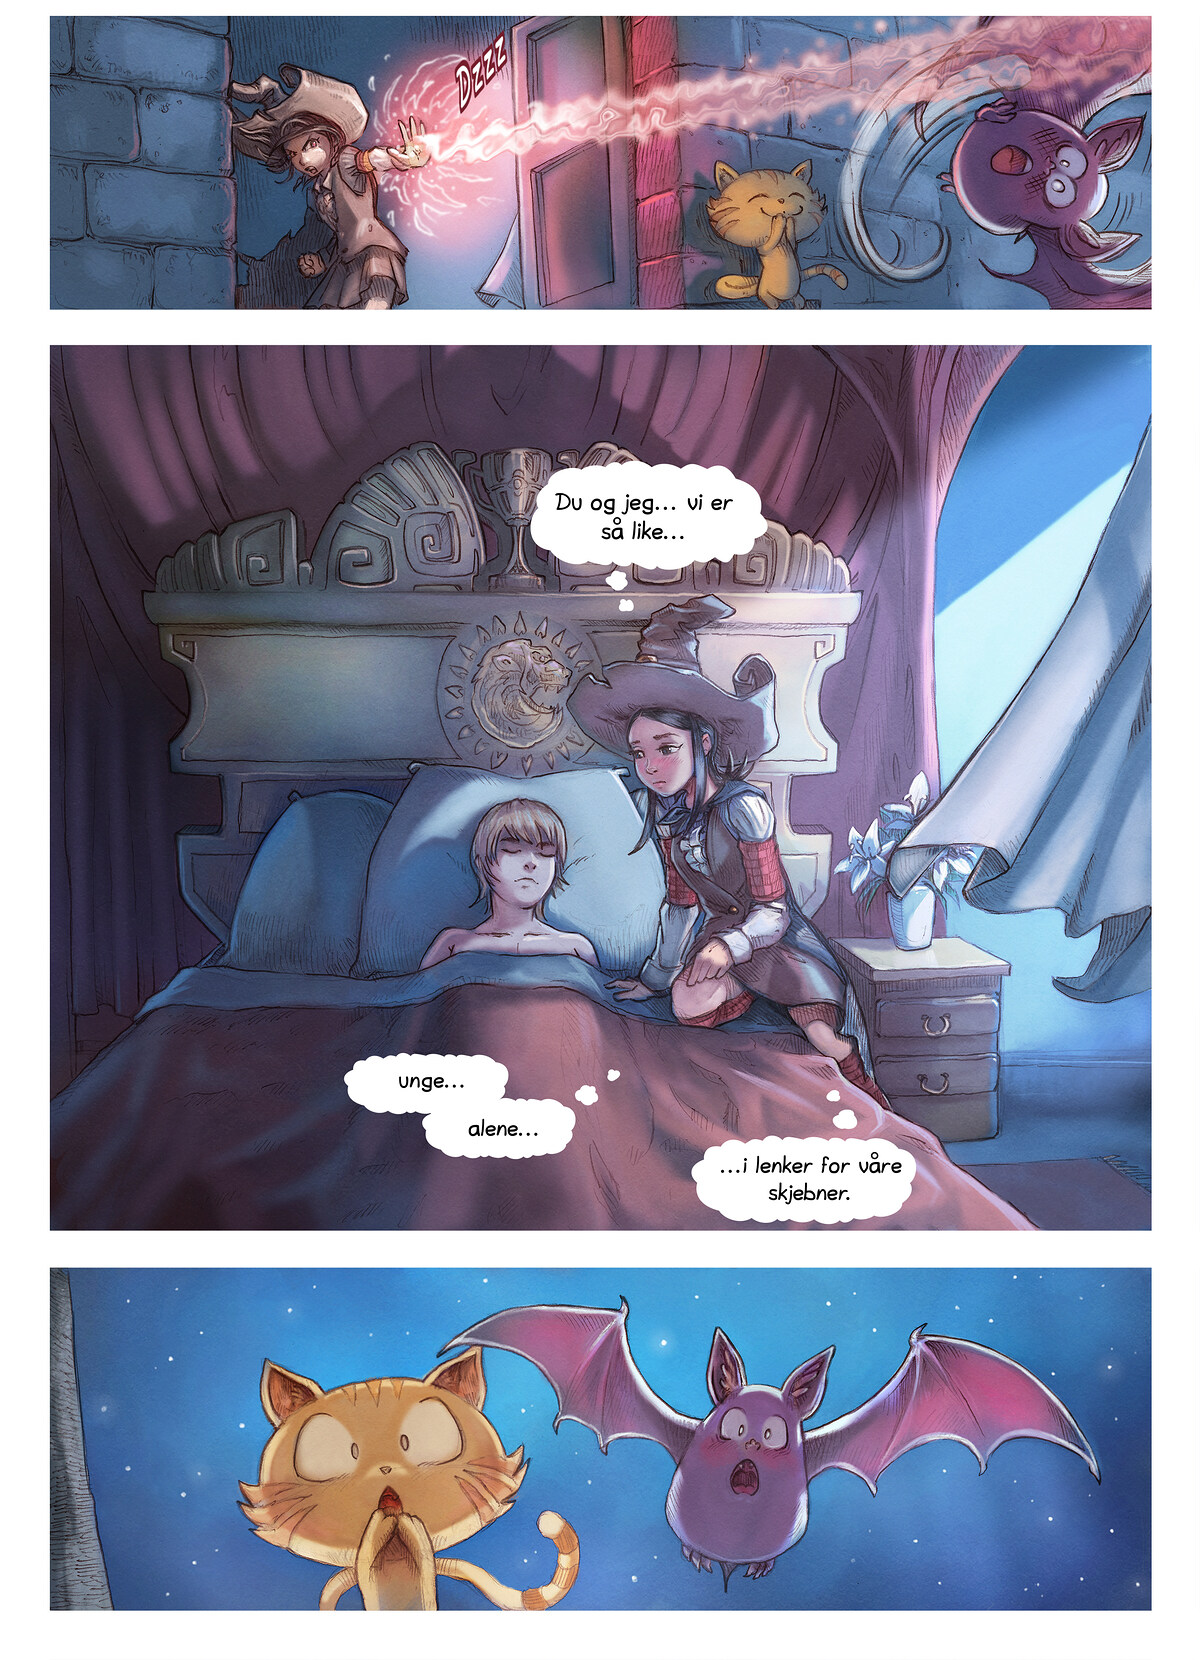 Episode 11: Kaosias hekser, Page 5